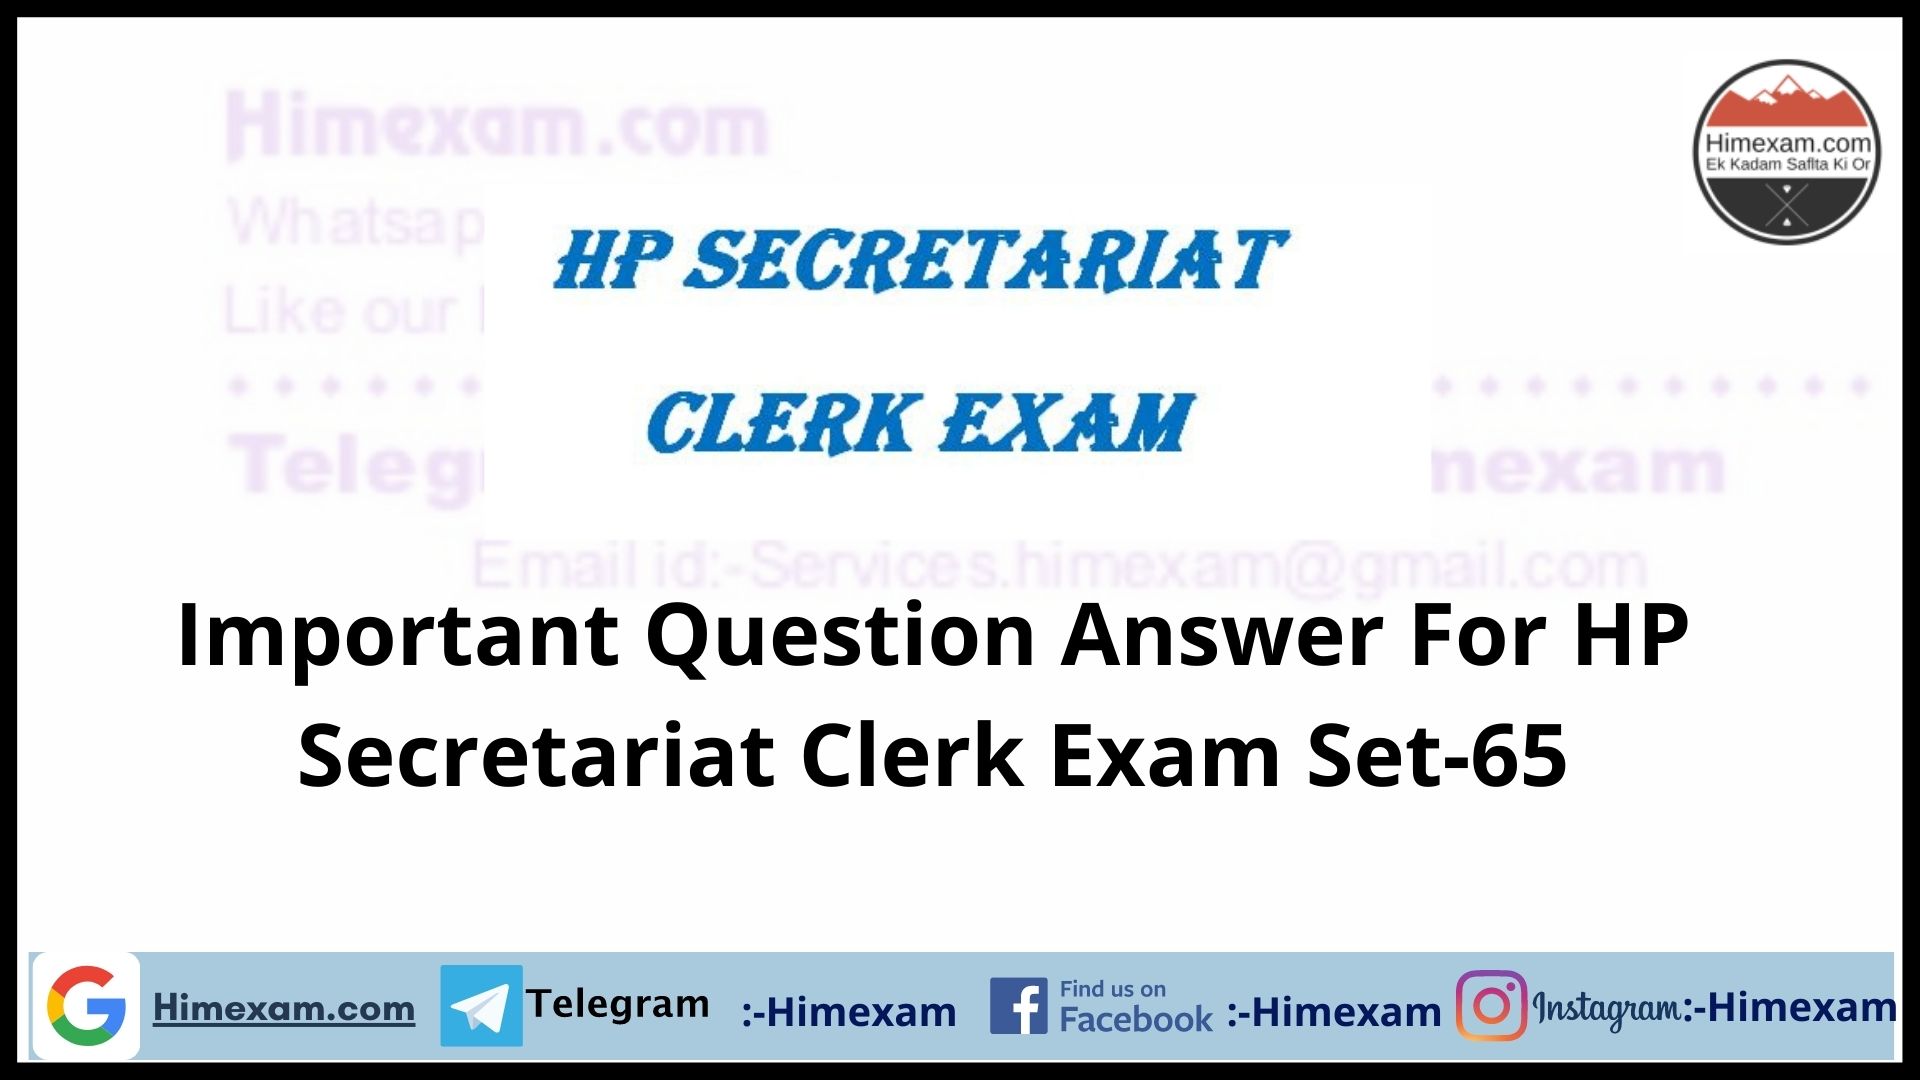 Important Question Answer For HP Secretariat Clerk Exam Set-65